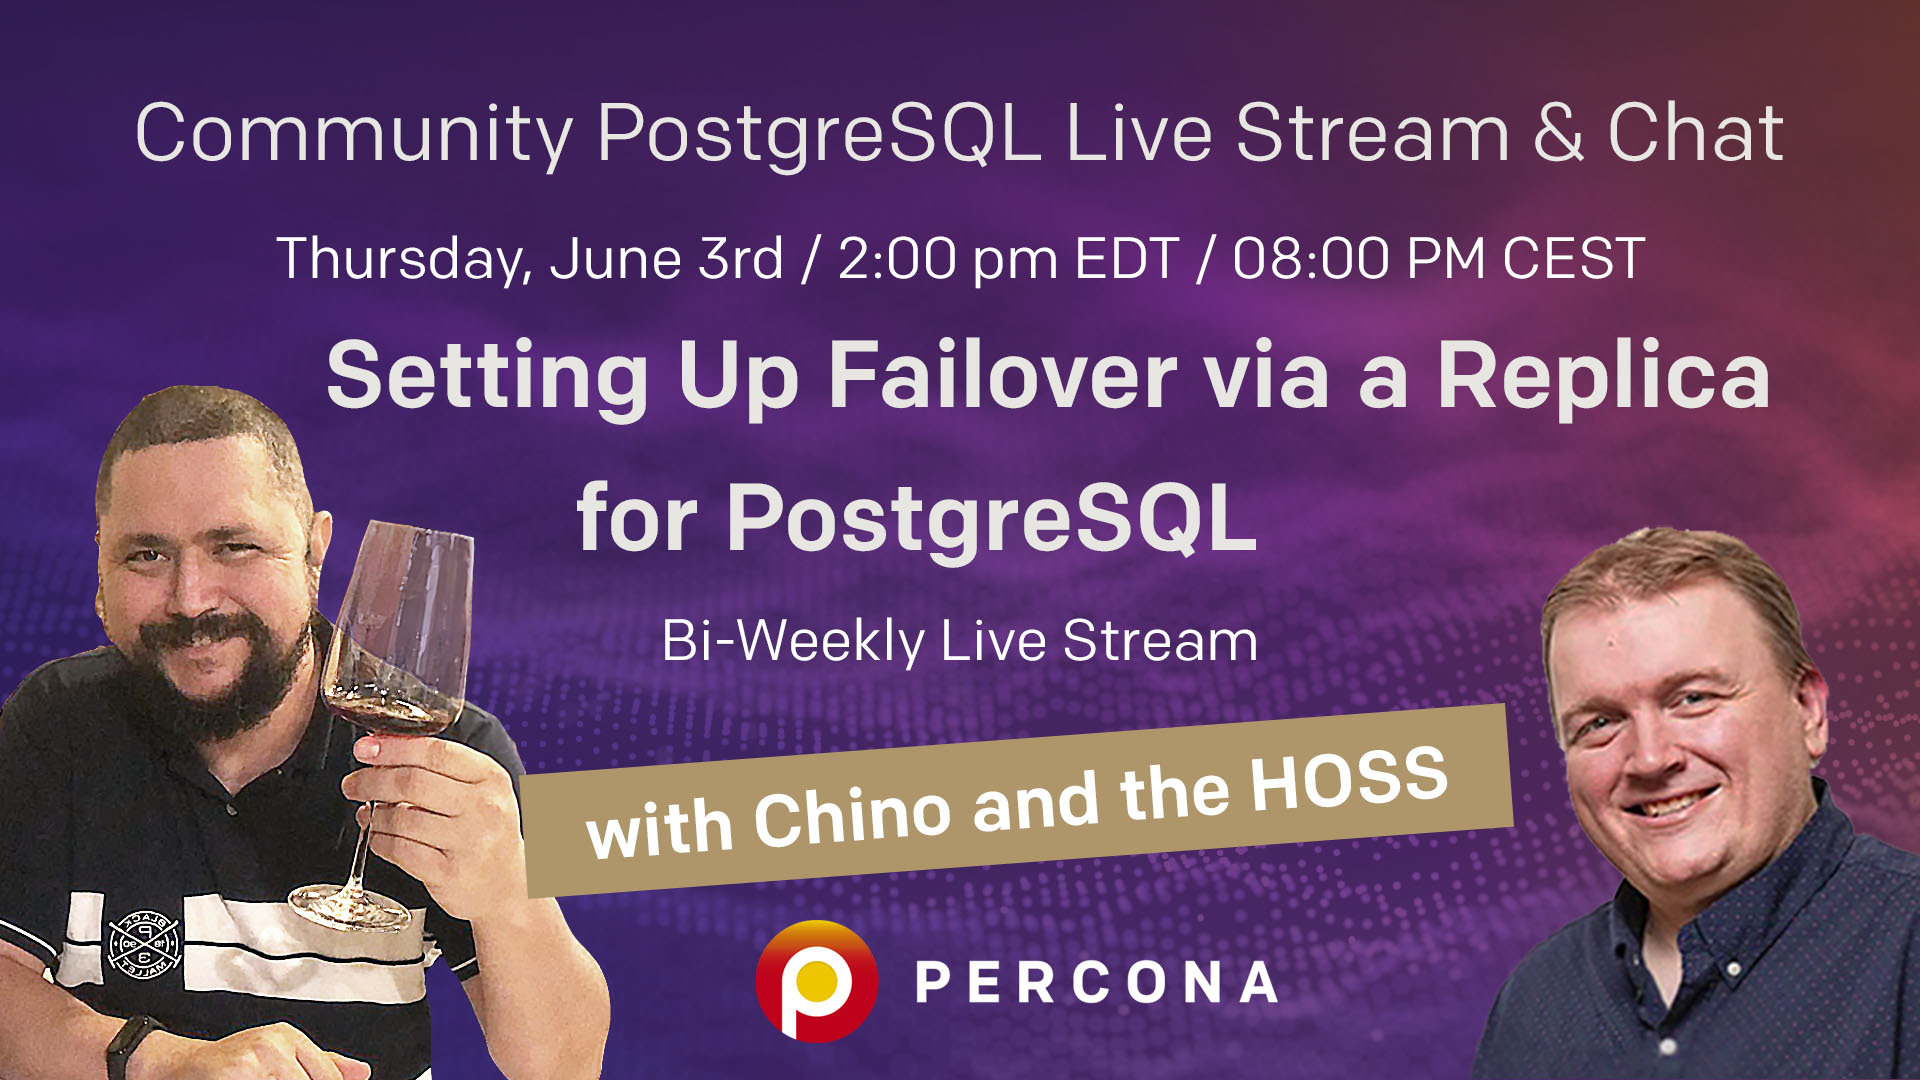 Percona Community PostgreSQL Live Stream & Chat - June 3rd